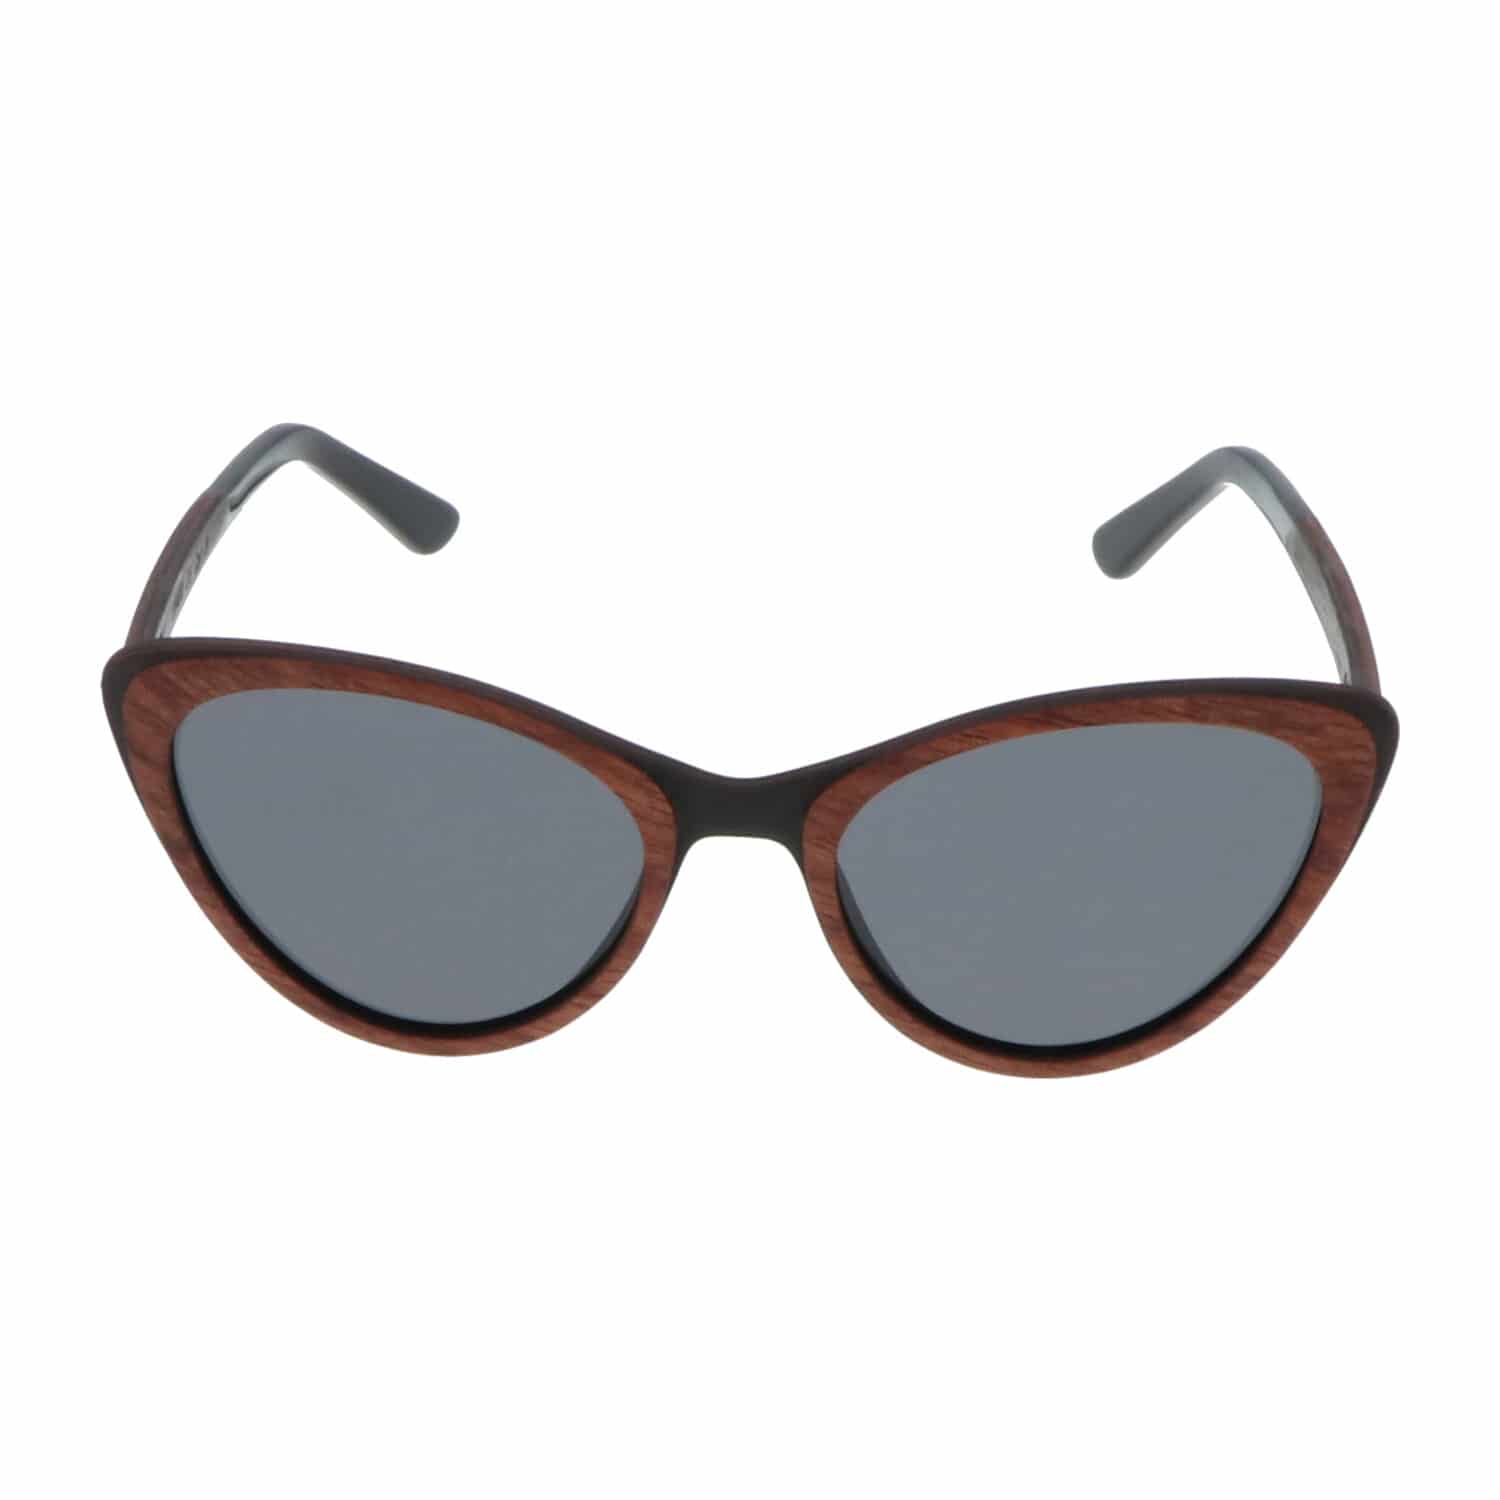 5one® Cecina Cateye Grey - zonnebril met Kosso/Ebony houten montuur